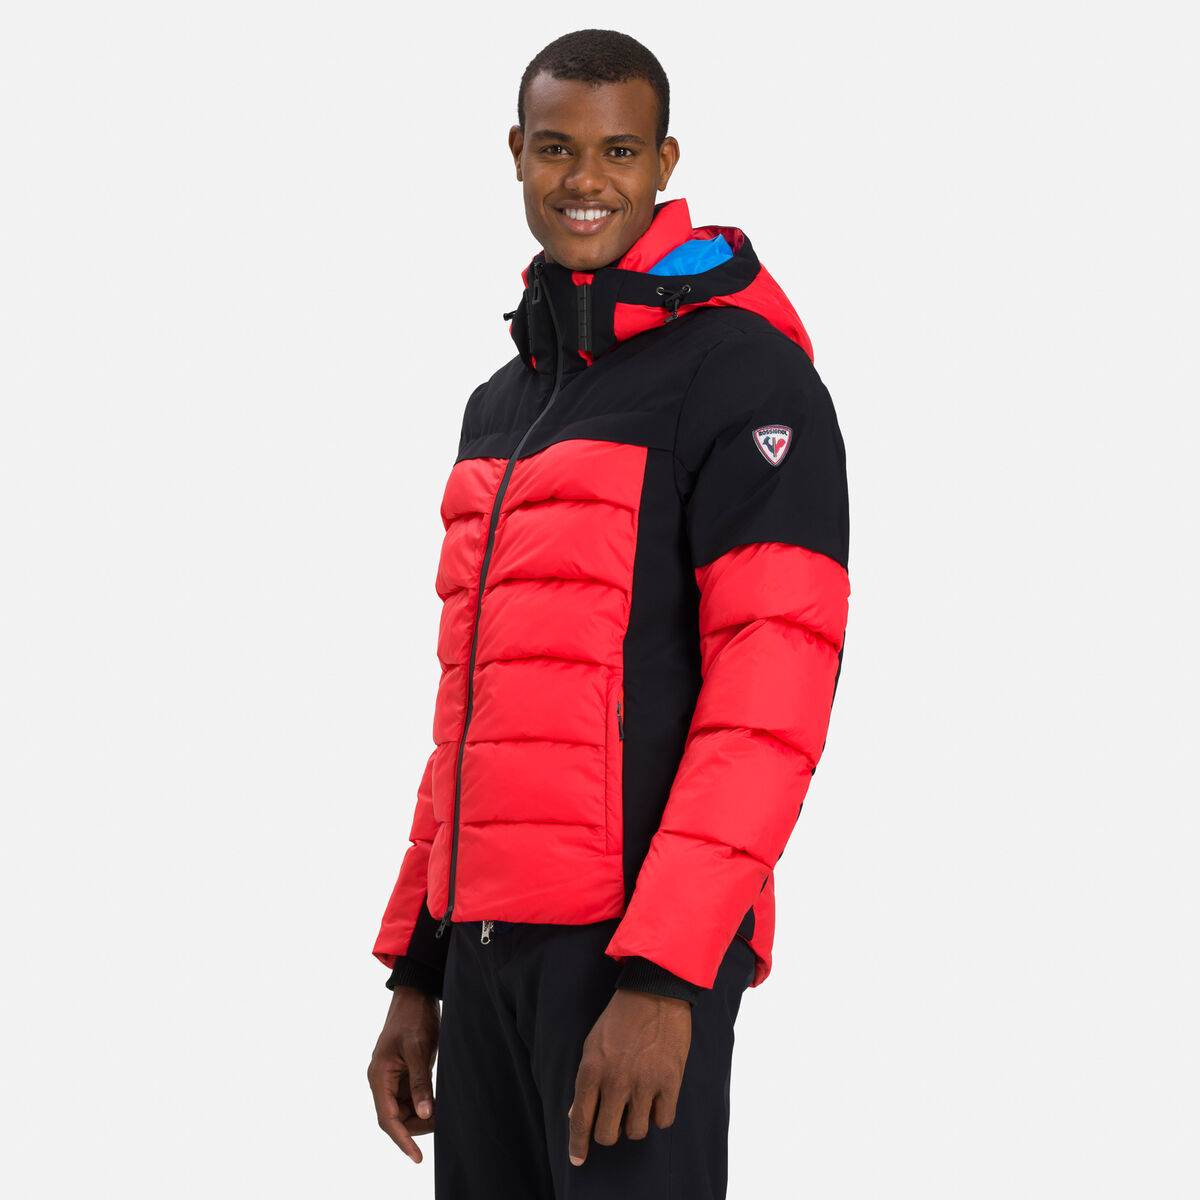 Men's Surfusion ski jacket